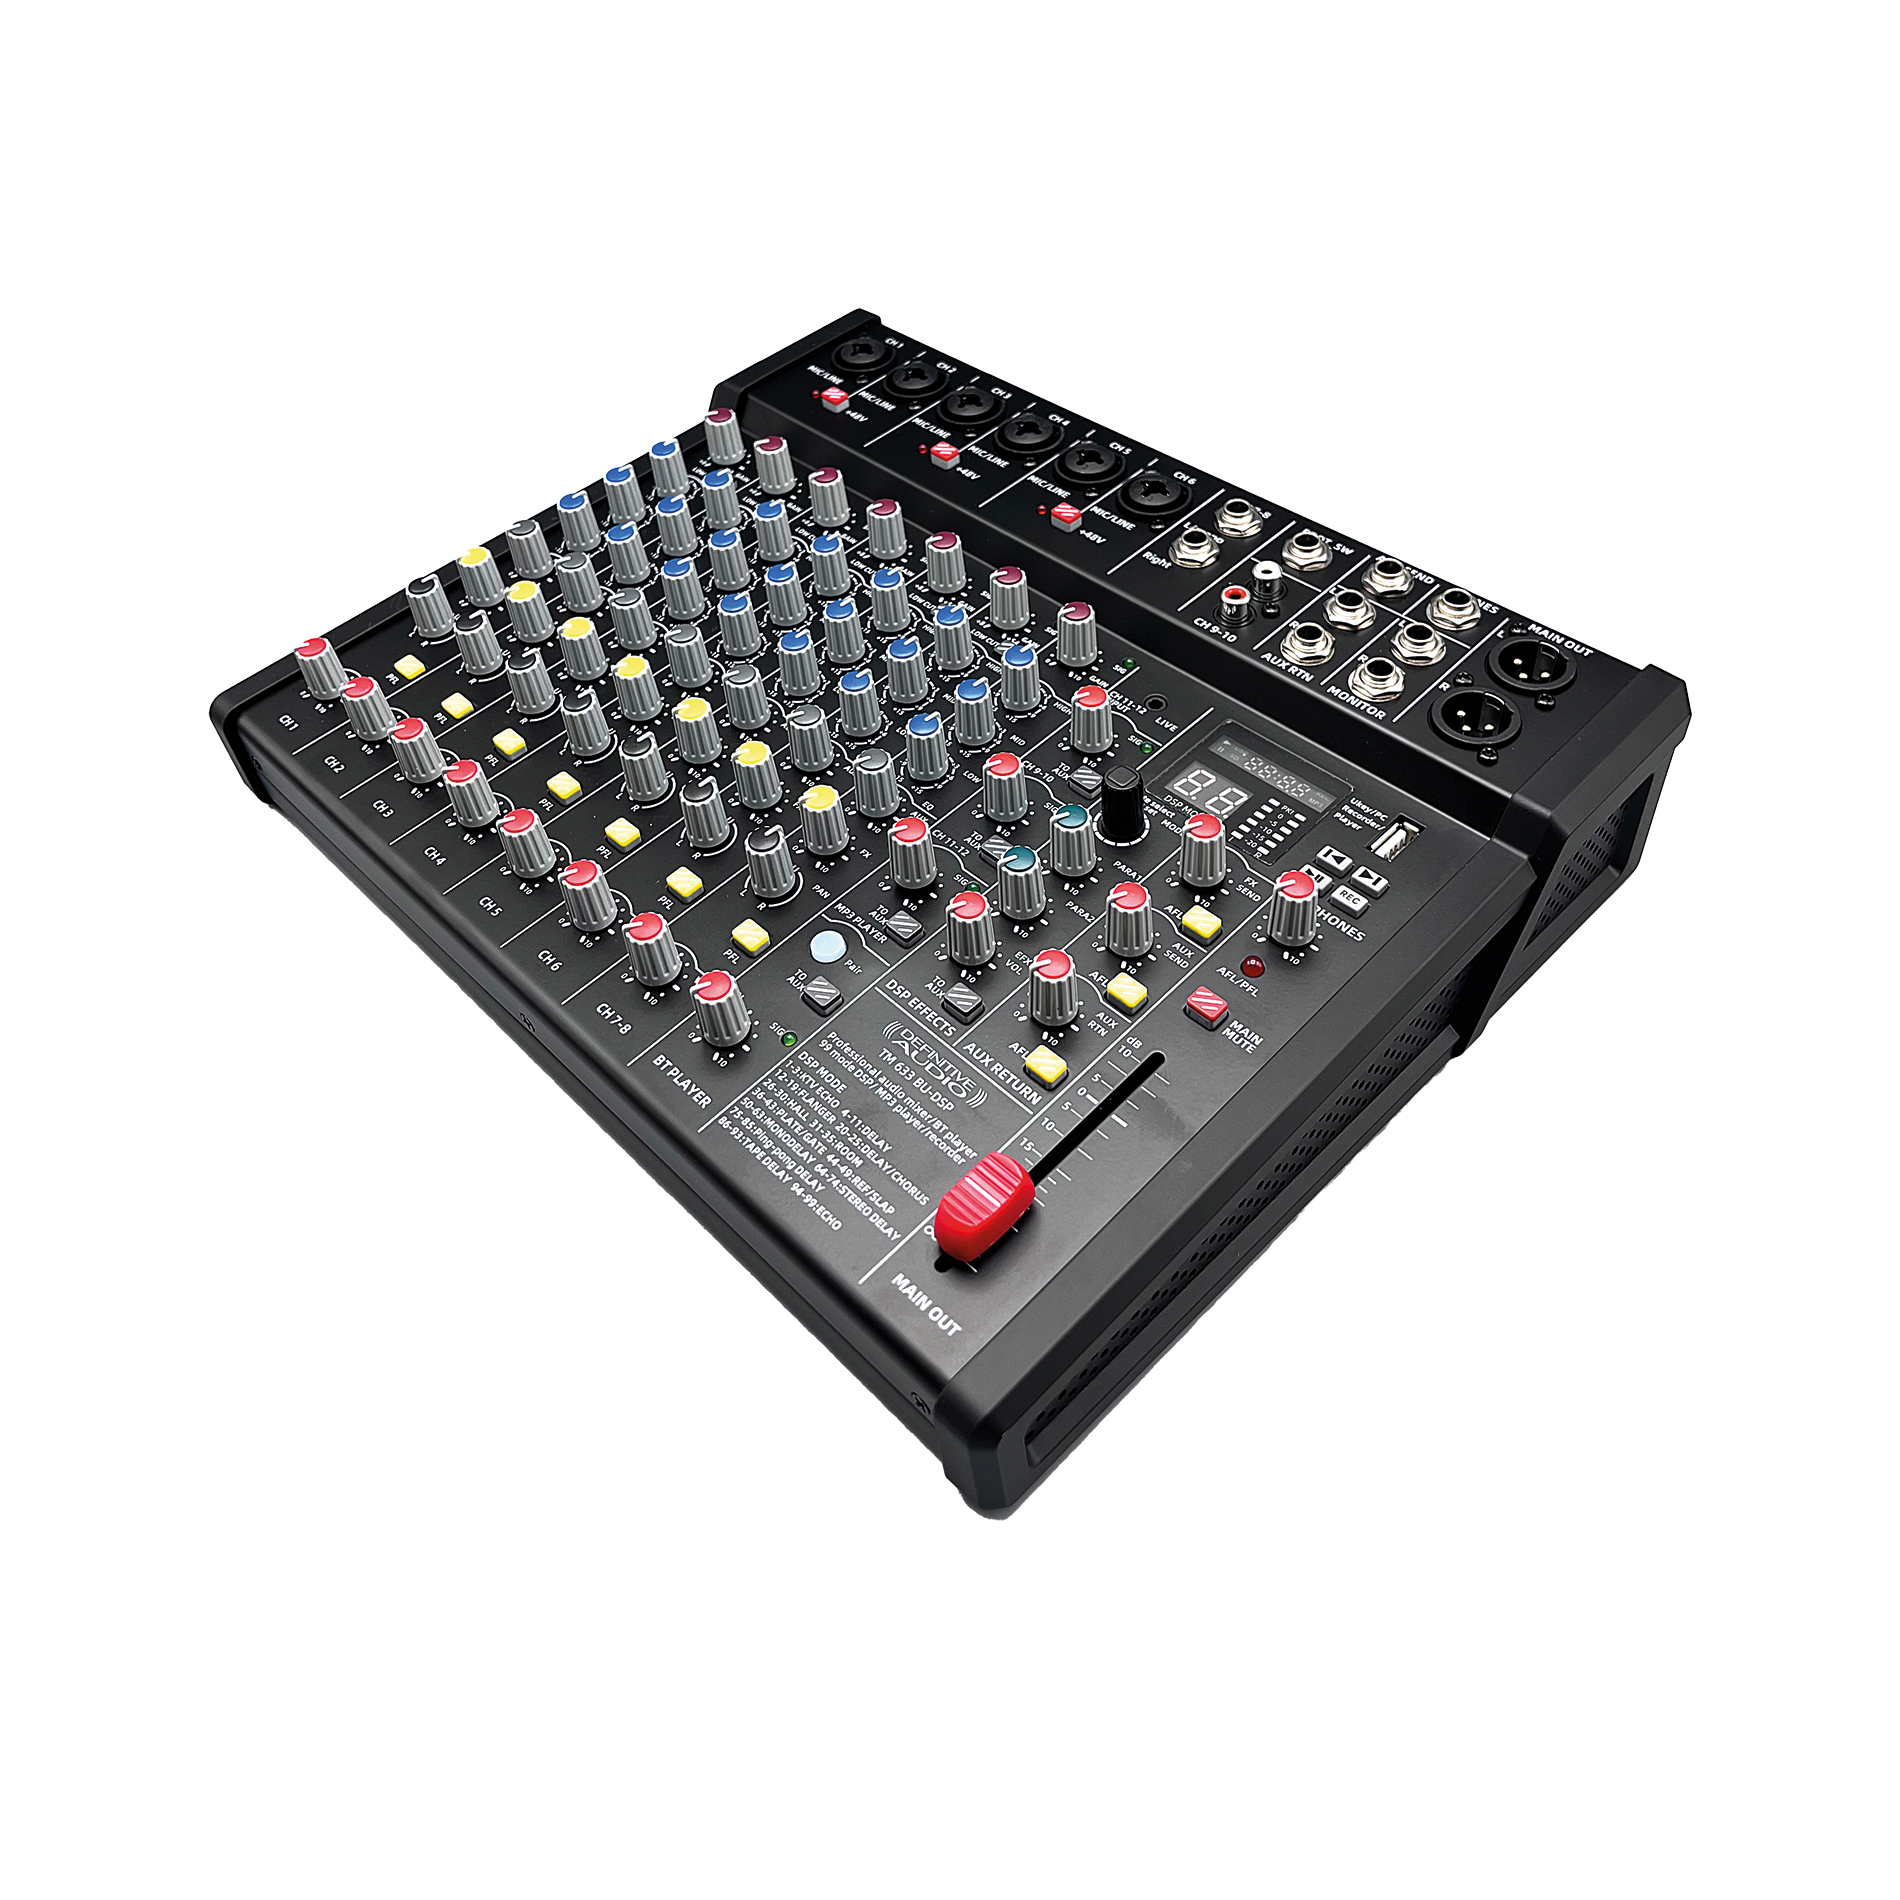 Definitive Audio Tm 633 Bu-dsp - Analog mixing desk - Variation 3